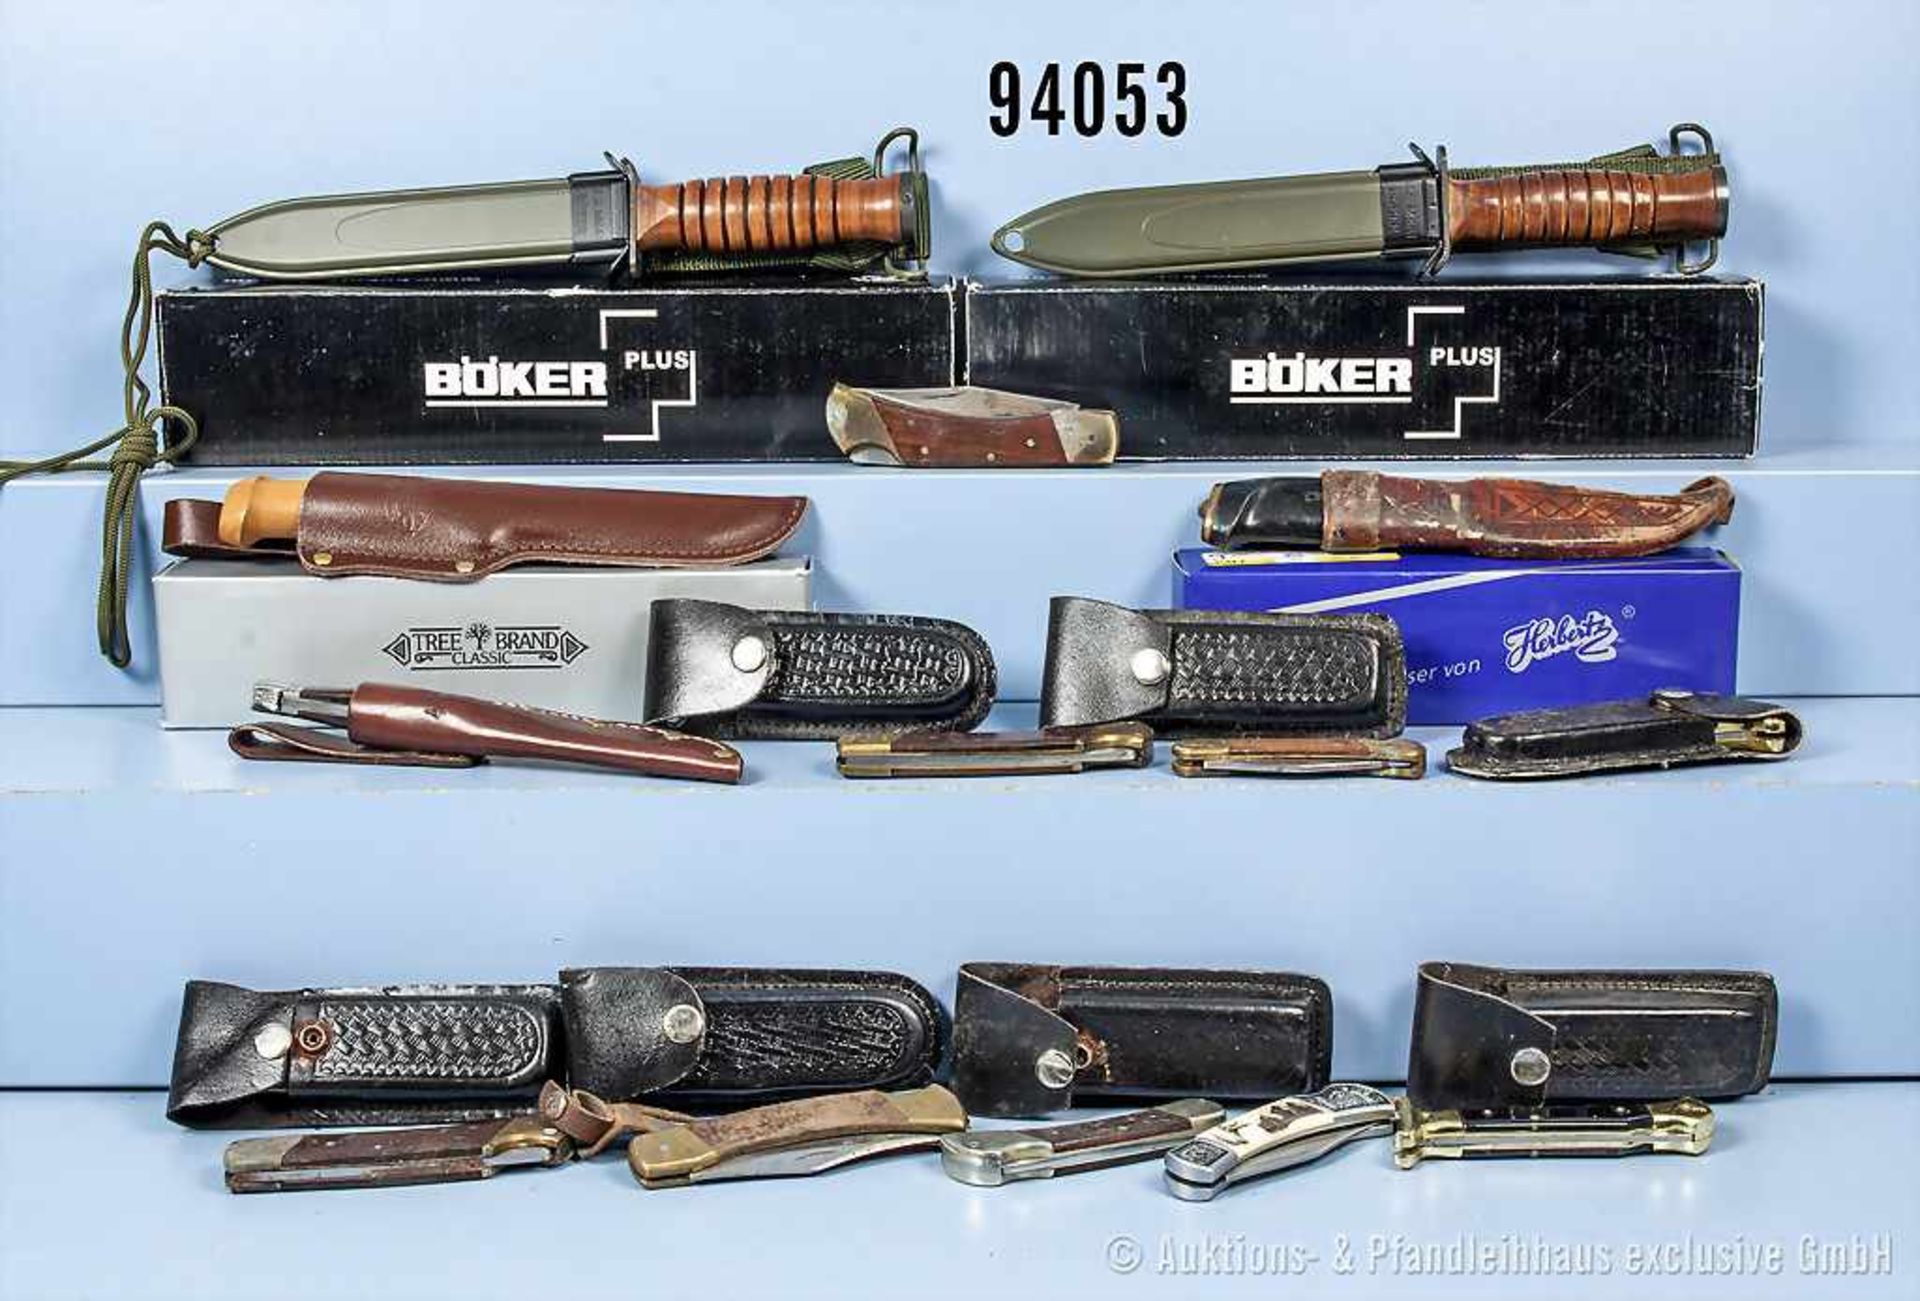 Konv. neuzeitliche Bajonette und Messer, u. a. 3 U.S.-Bajonette "U. S. M8AI BÖKER", Nachfertigung